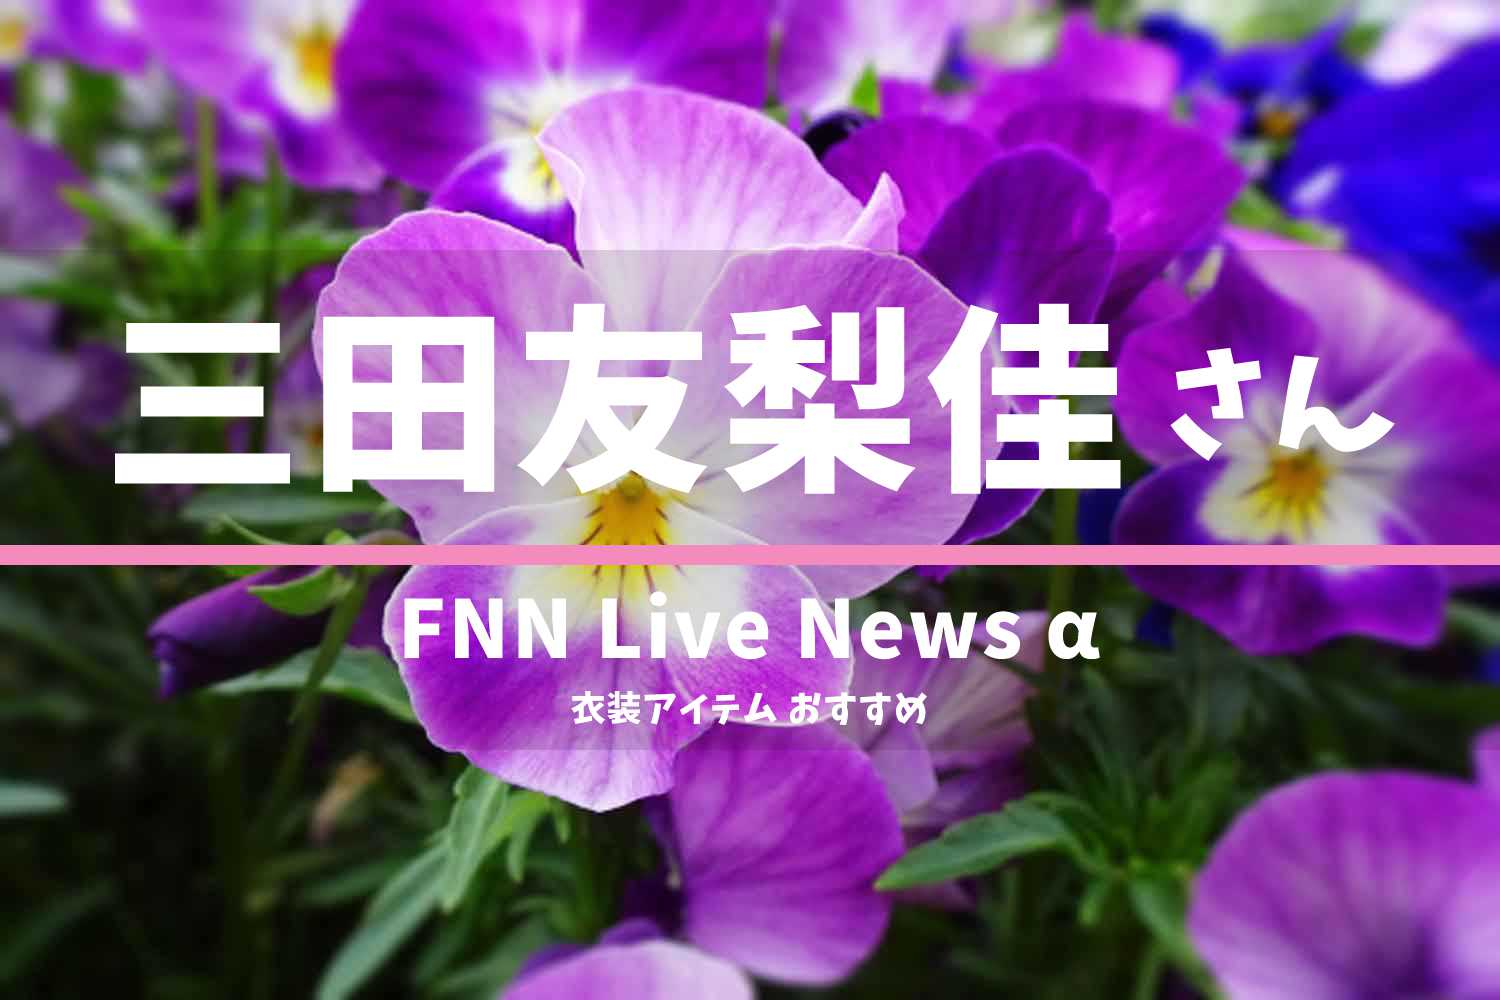 FNN Live News α 三田友梨佳さん 番組 衣装 2022年3月22日放送